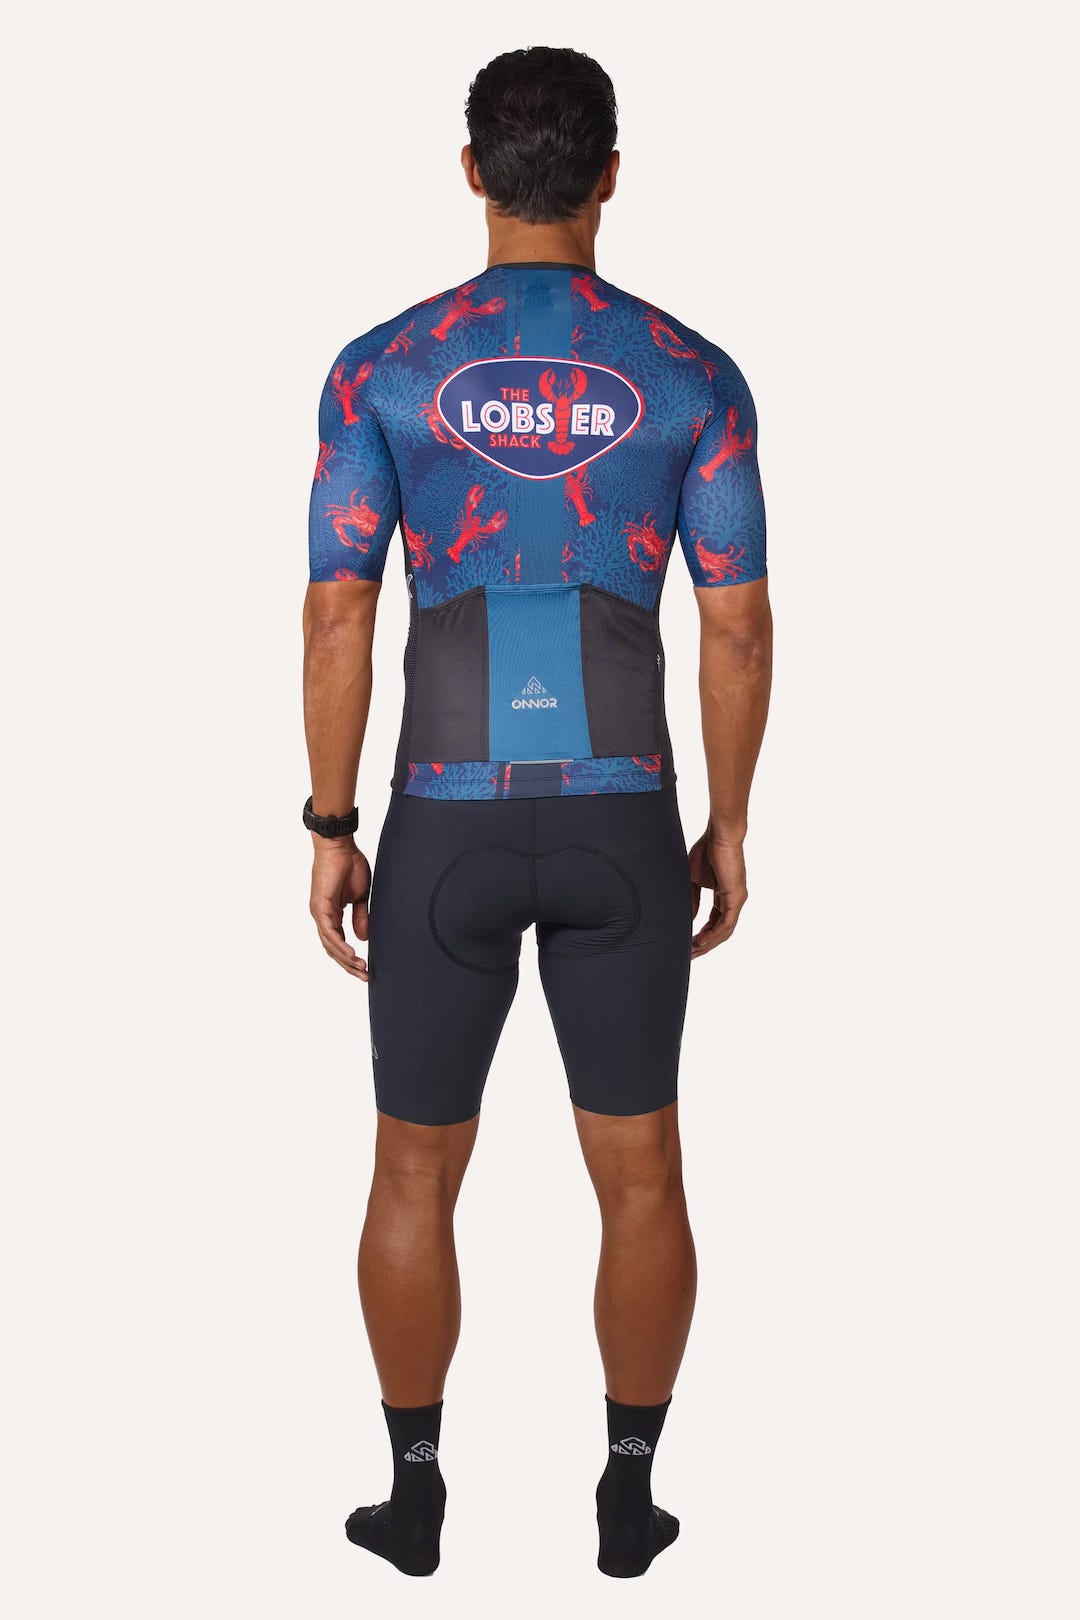 personalized cycling clothing no minimum